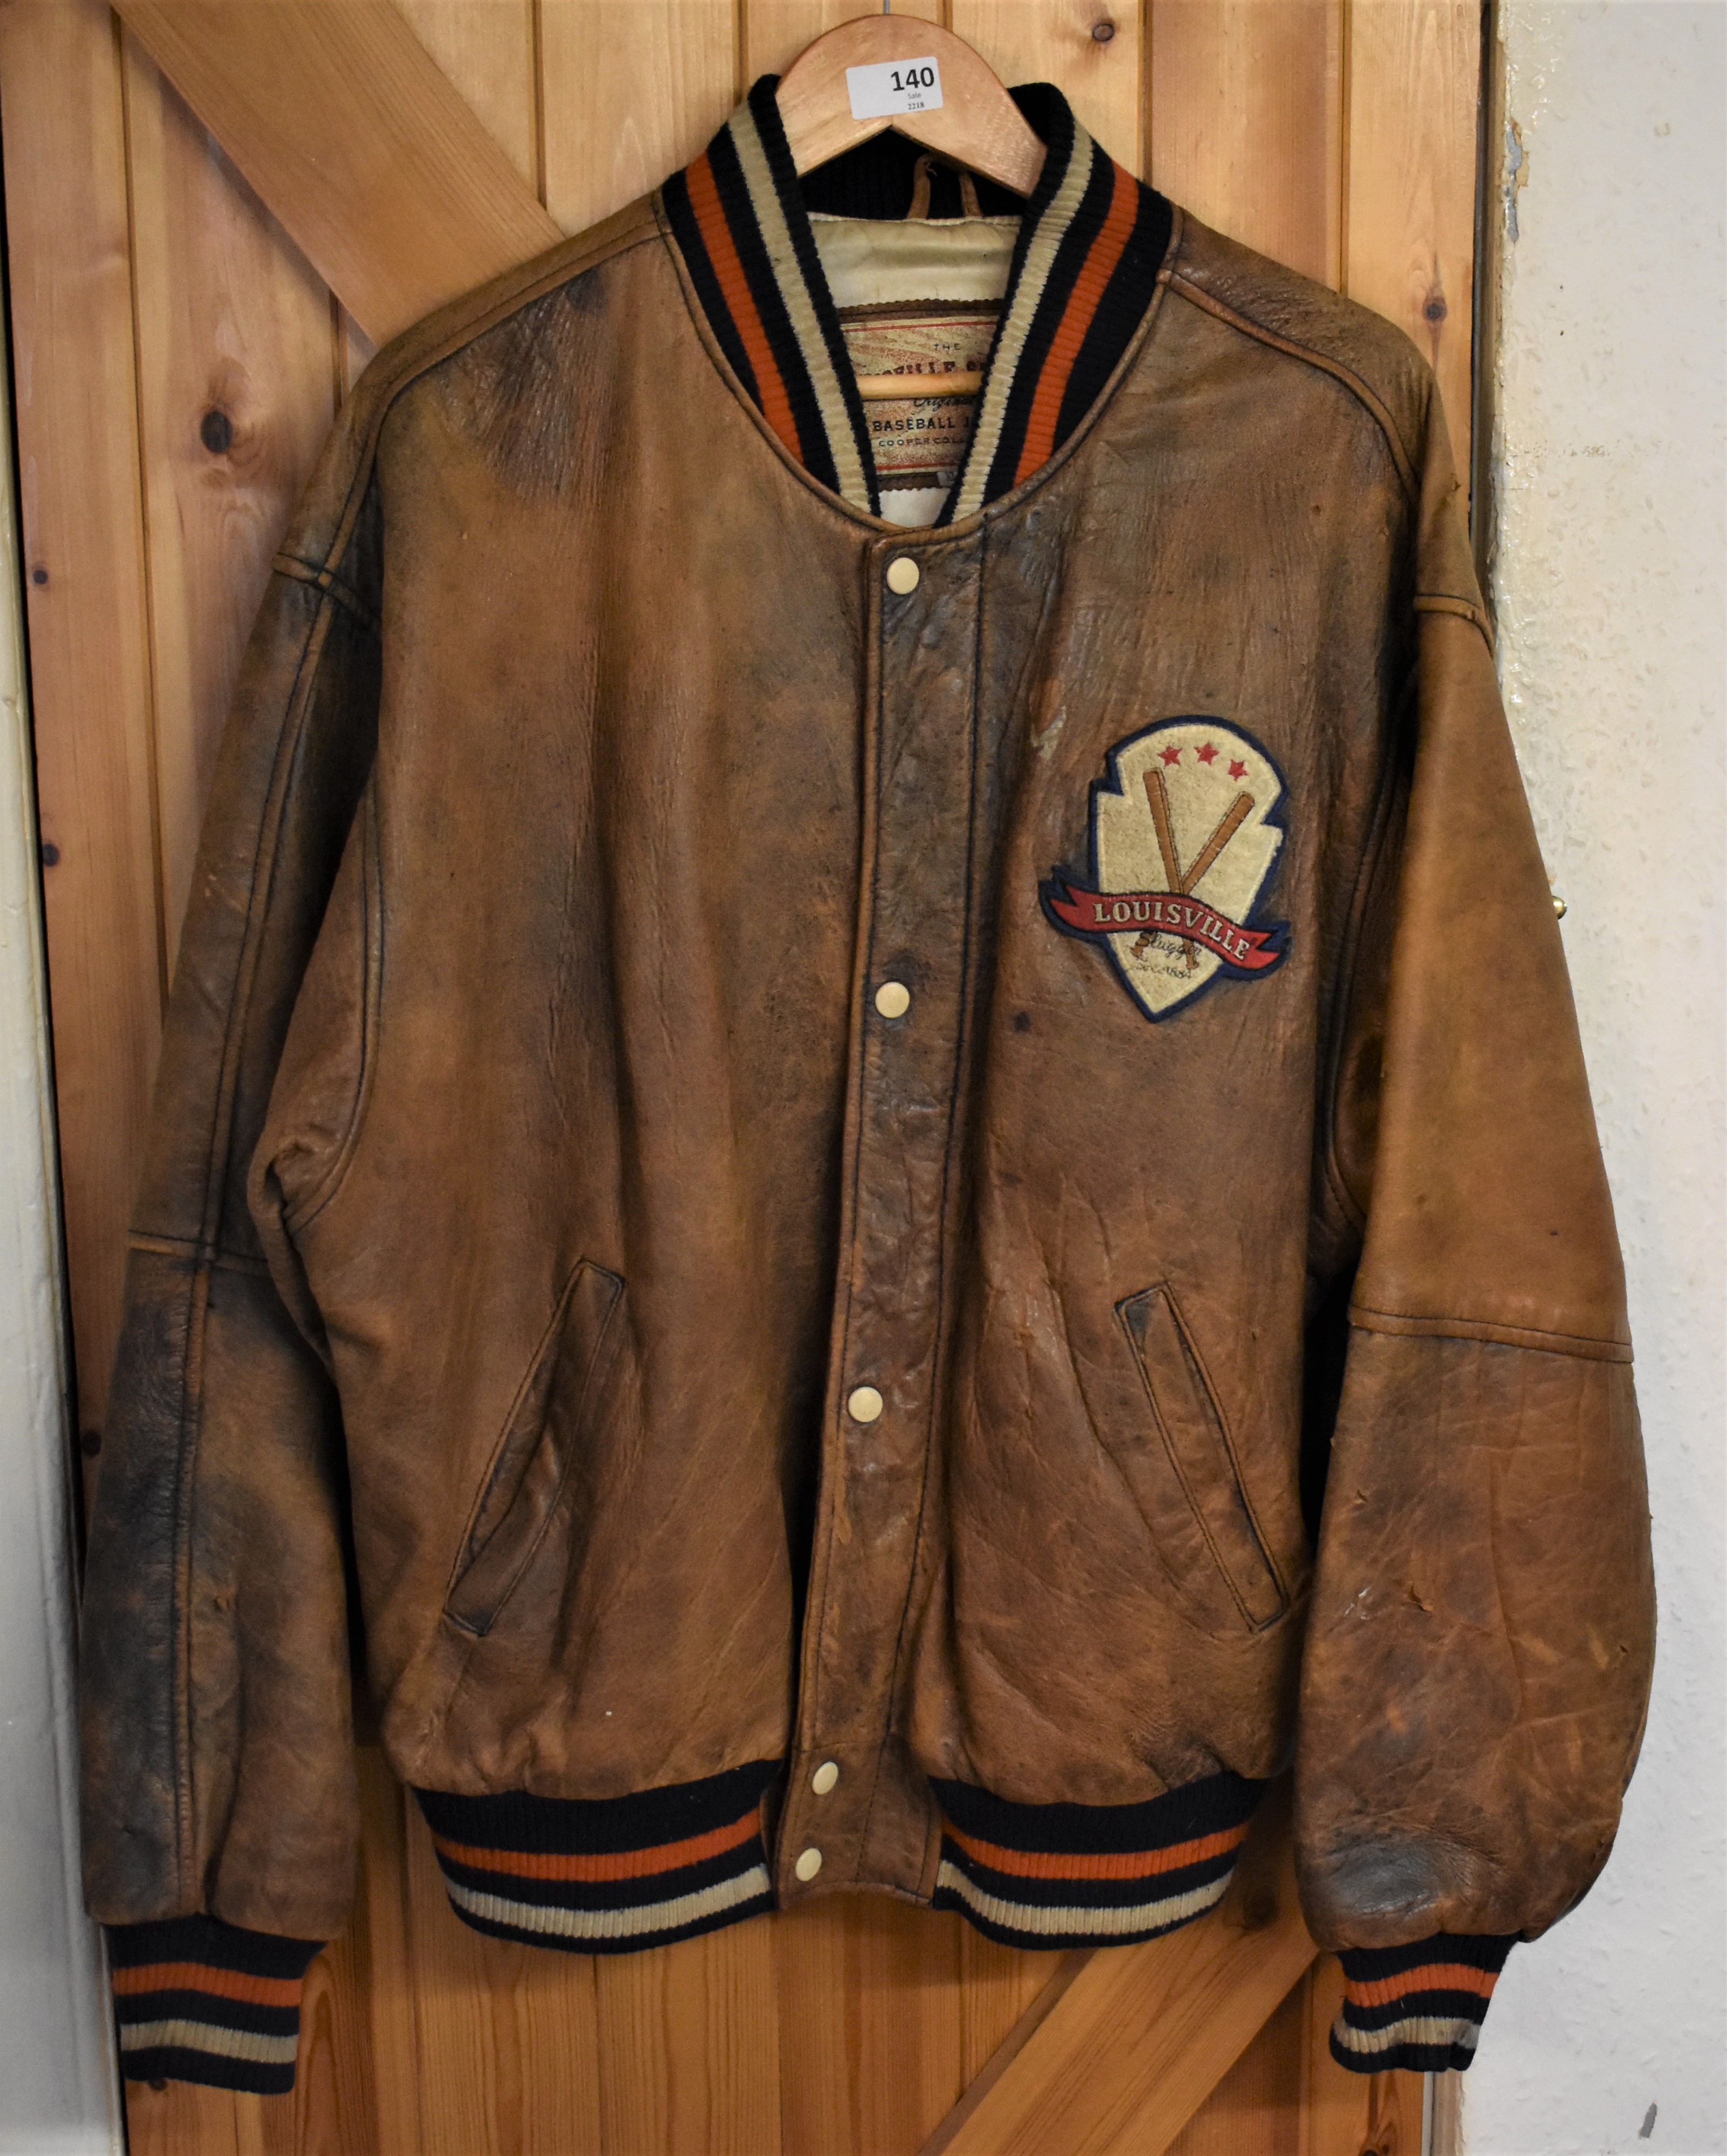 American 1990s Louisville Slugger Baseball Jacket, in worn condition in Size XL. Nice Americana